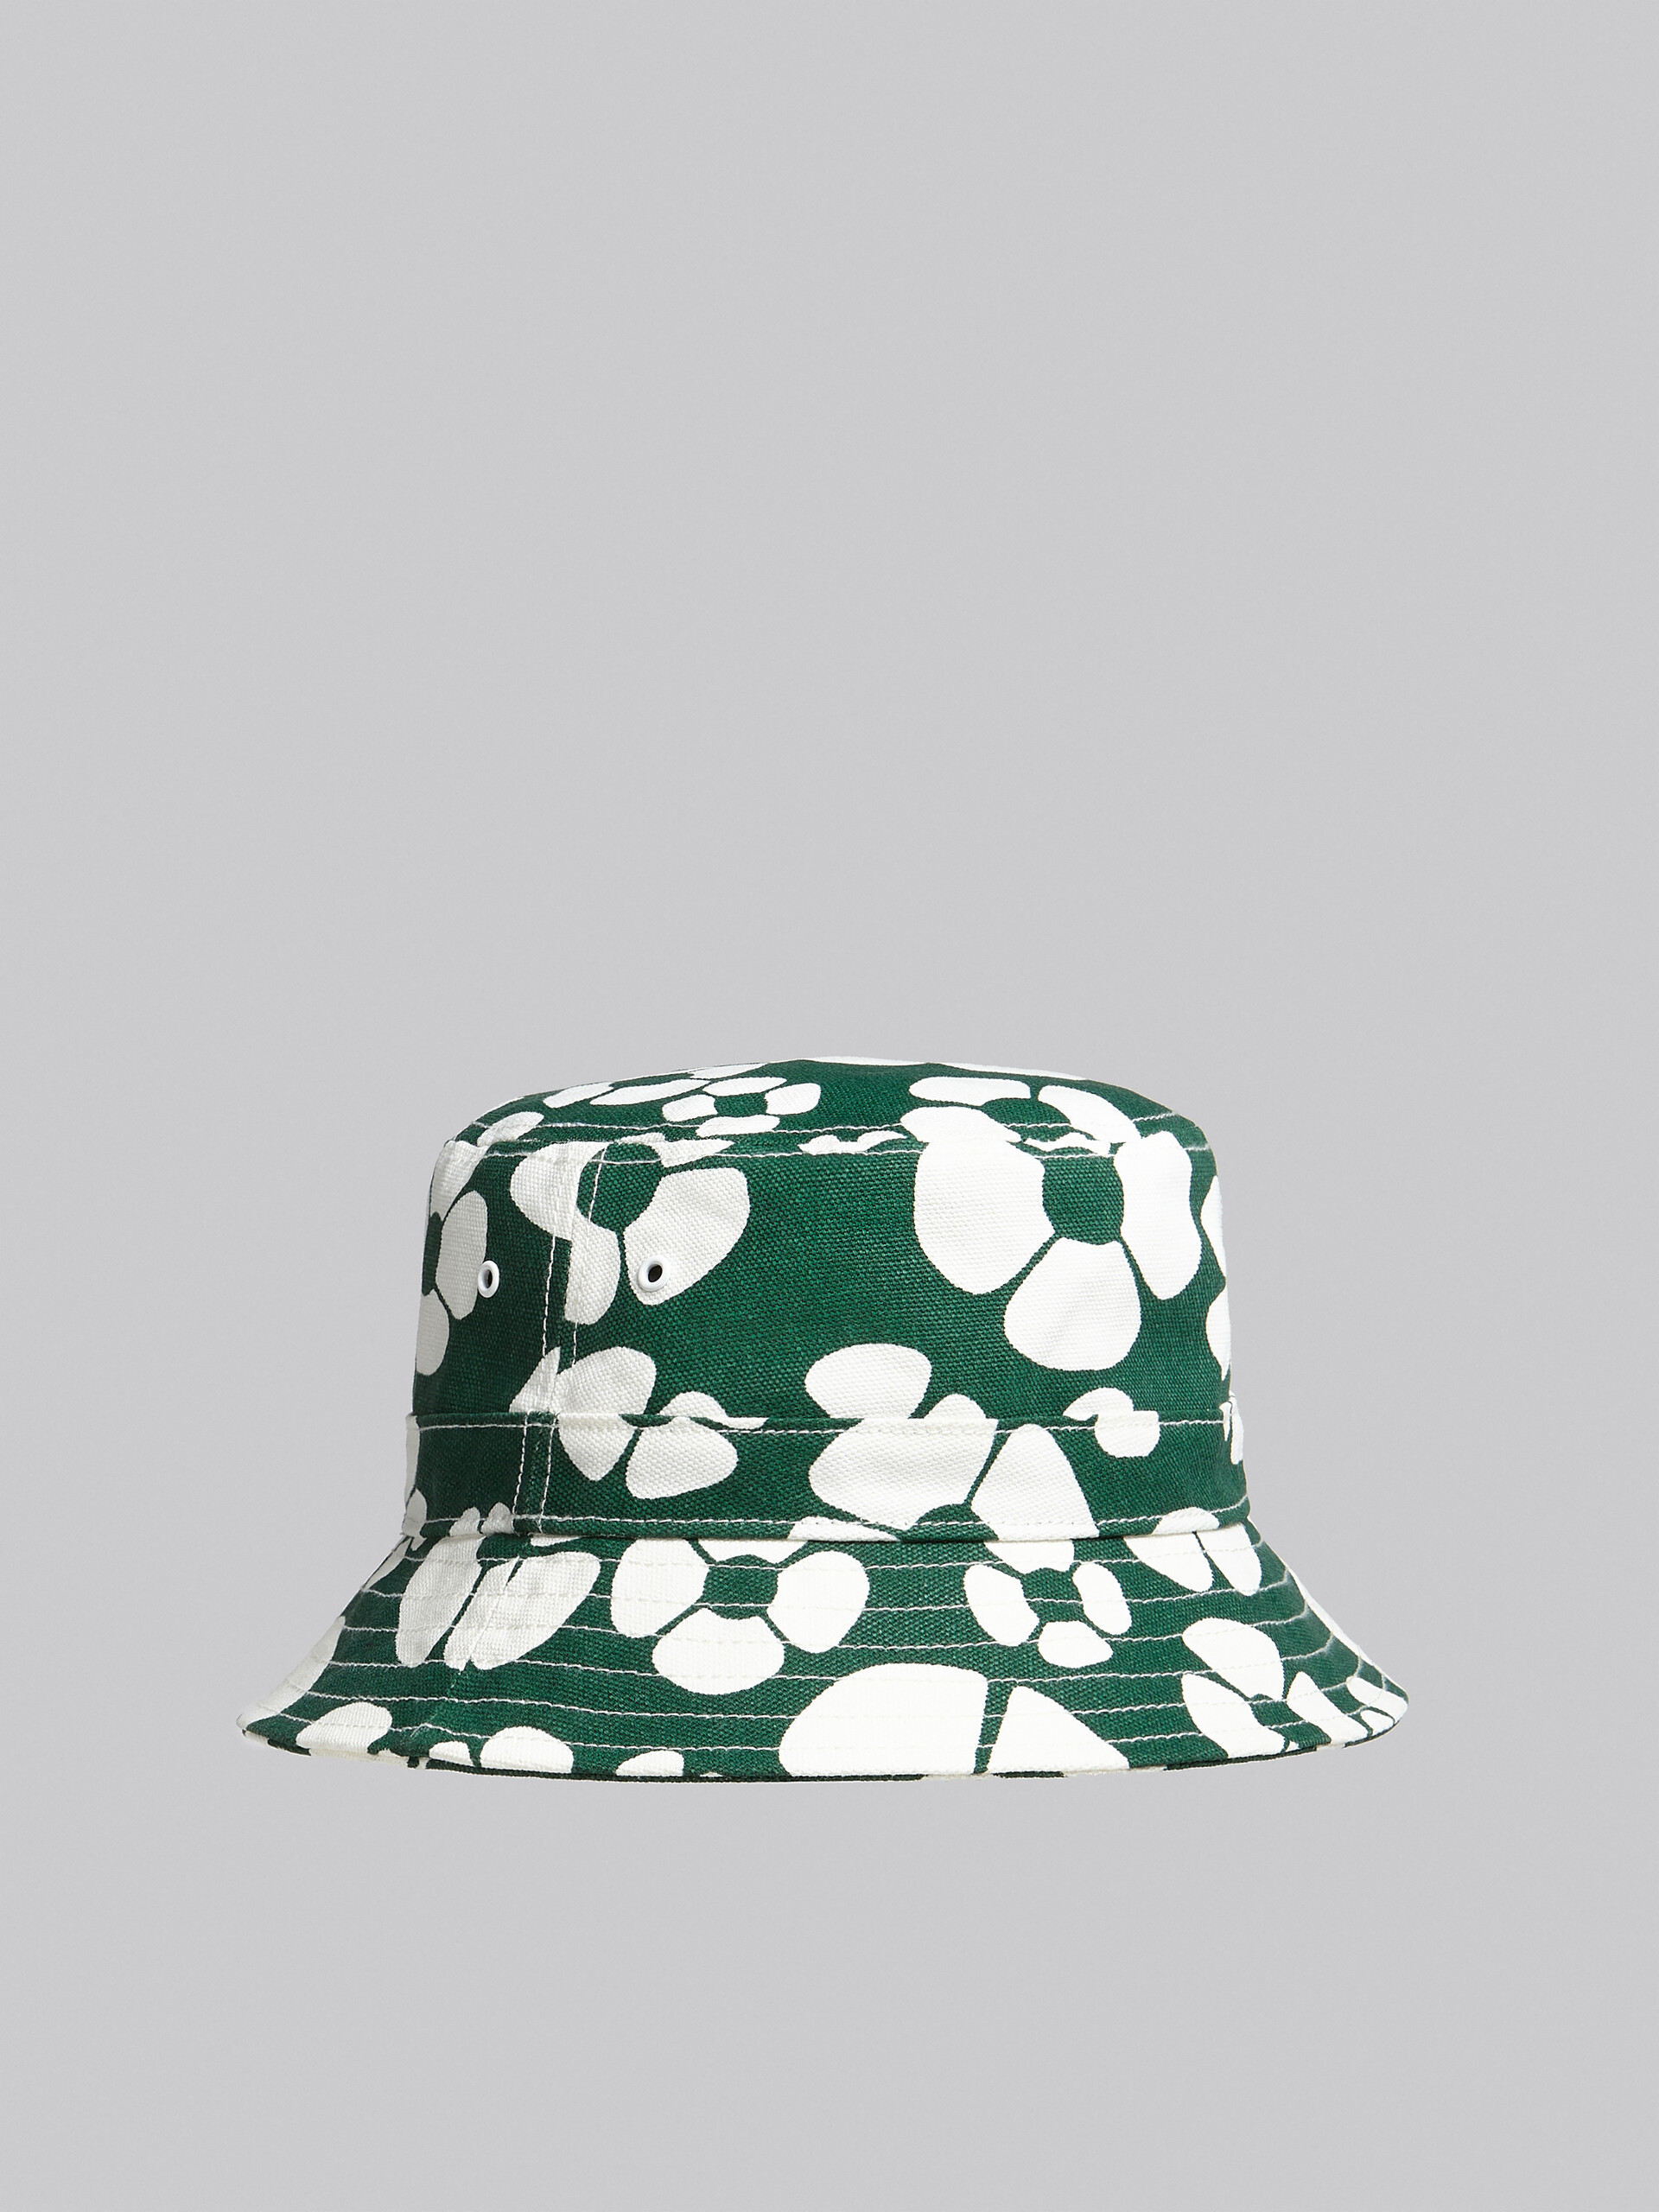 MARNI x CARHARTT WIP - Cappello bucket verde - Cappelli - Image 3